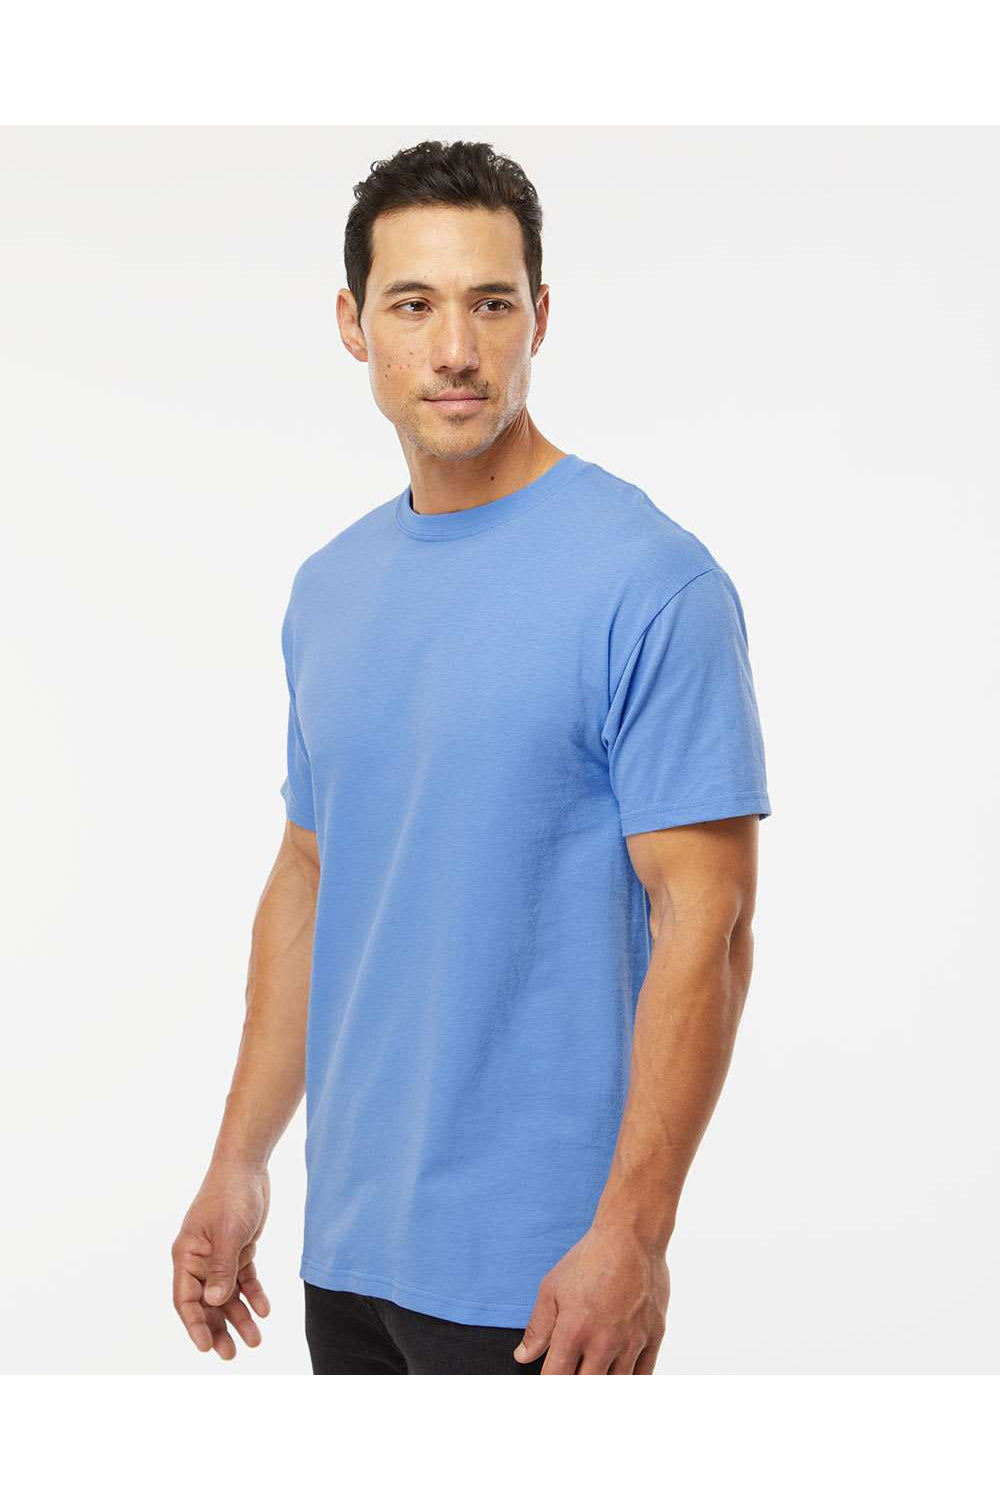 M&O 4800 Mens Gold Soft Touch Short Sleeve Crewneck T-Shirt Carolina Blue Model Side